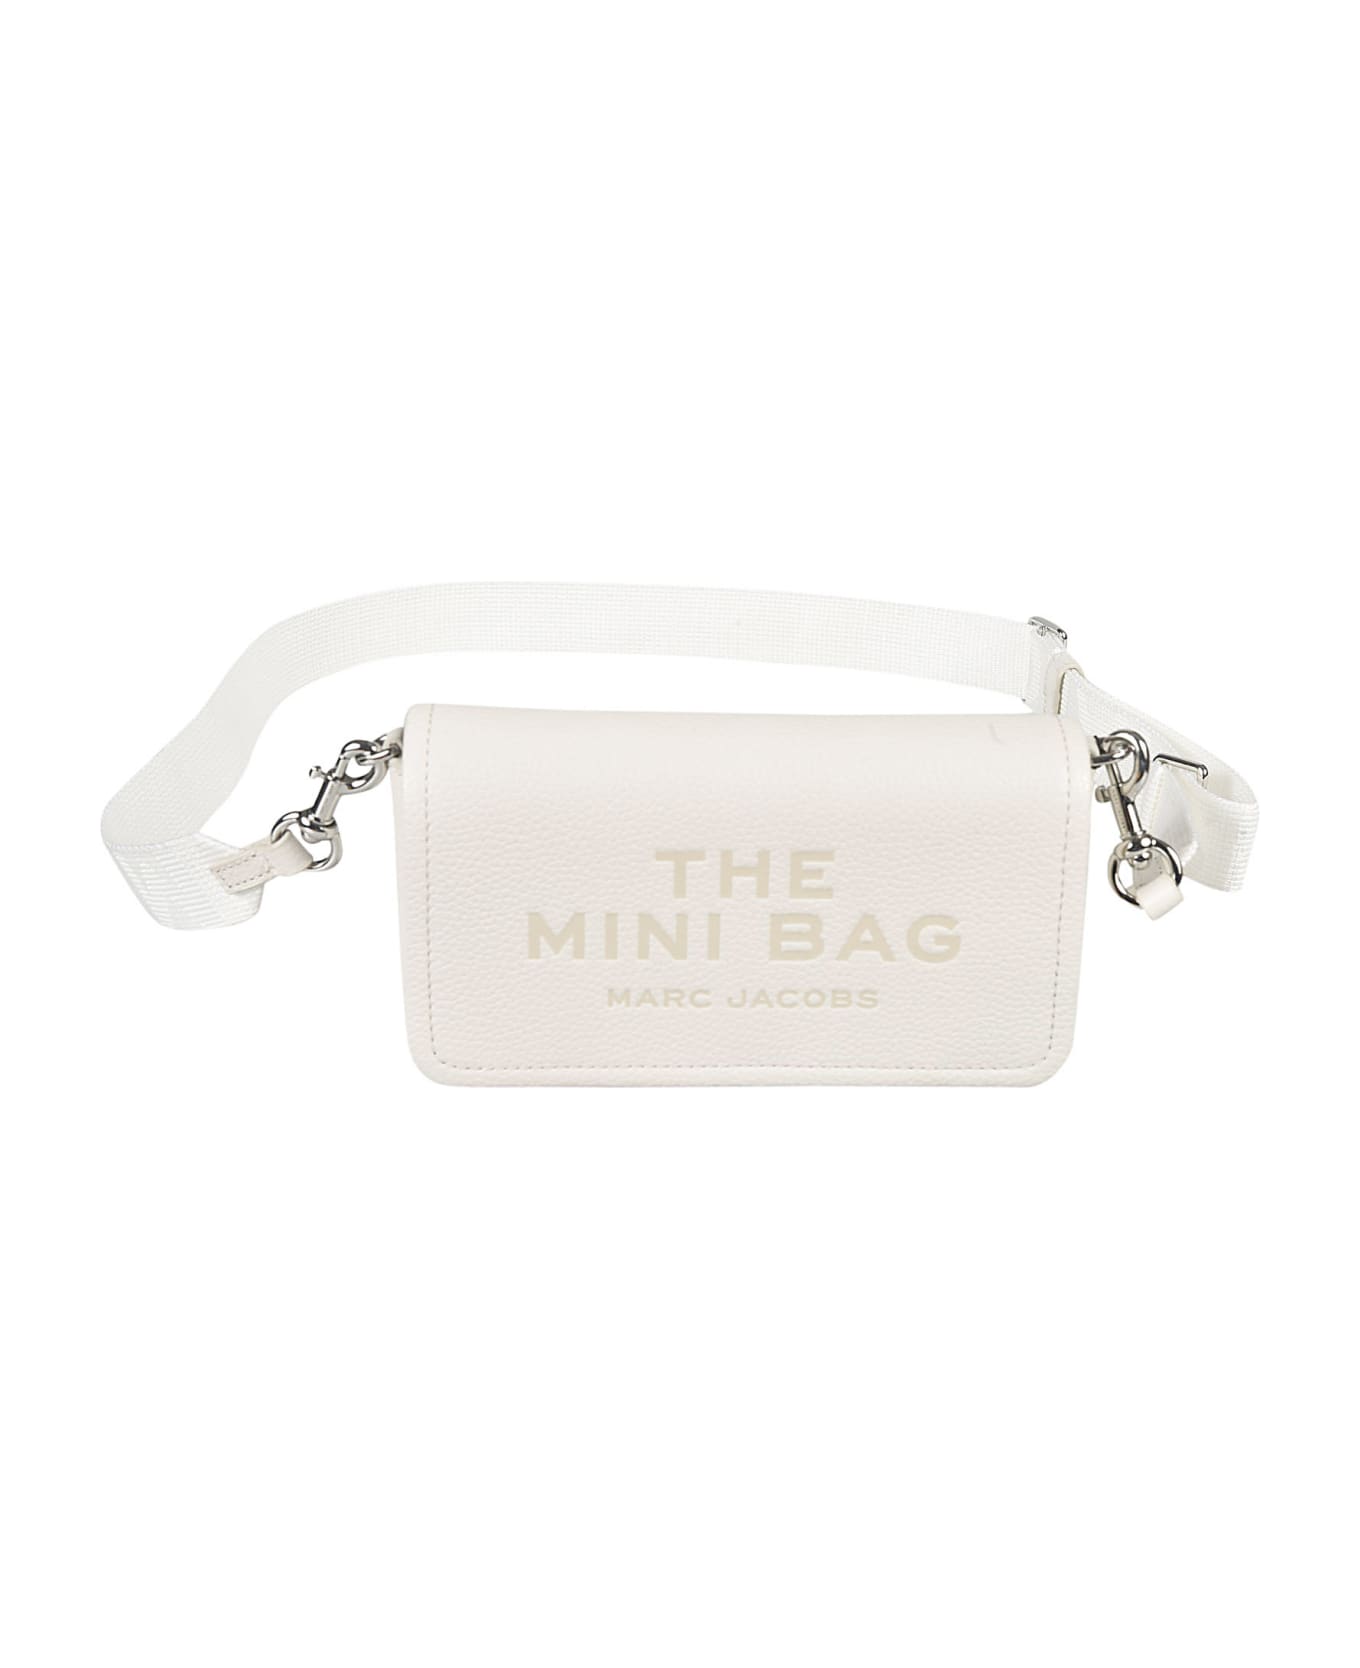 Marc Jacobs The Mini Bag Shoulder Bag - White